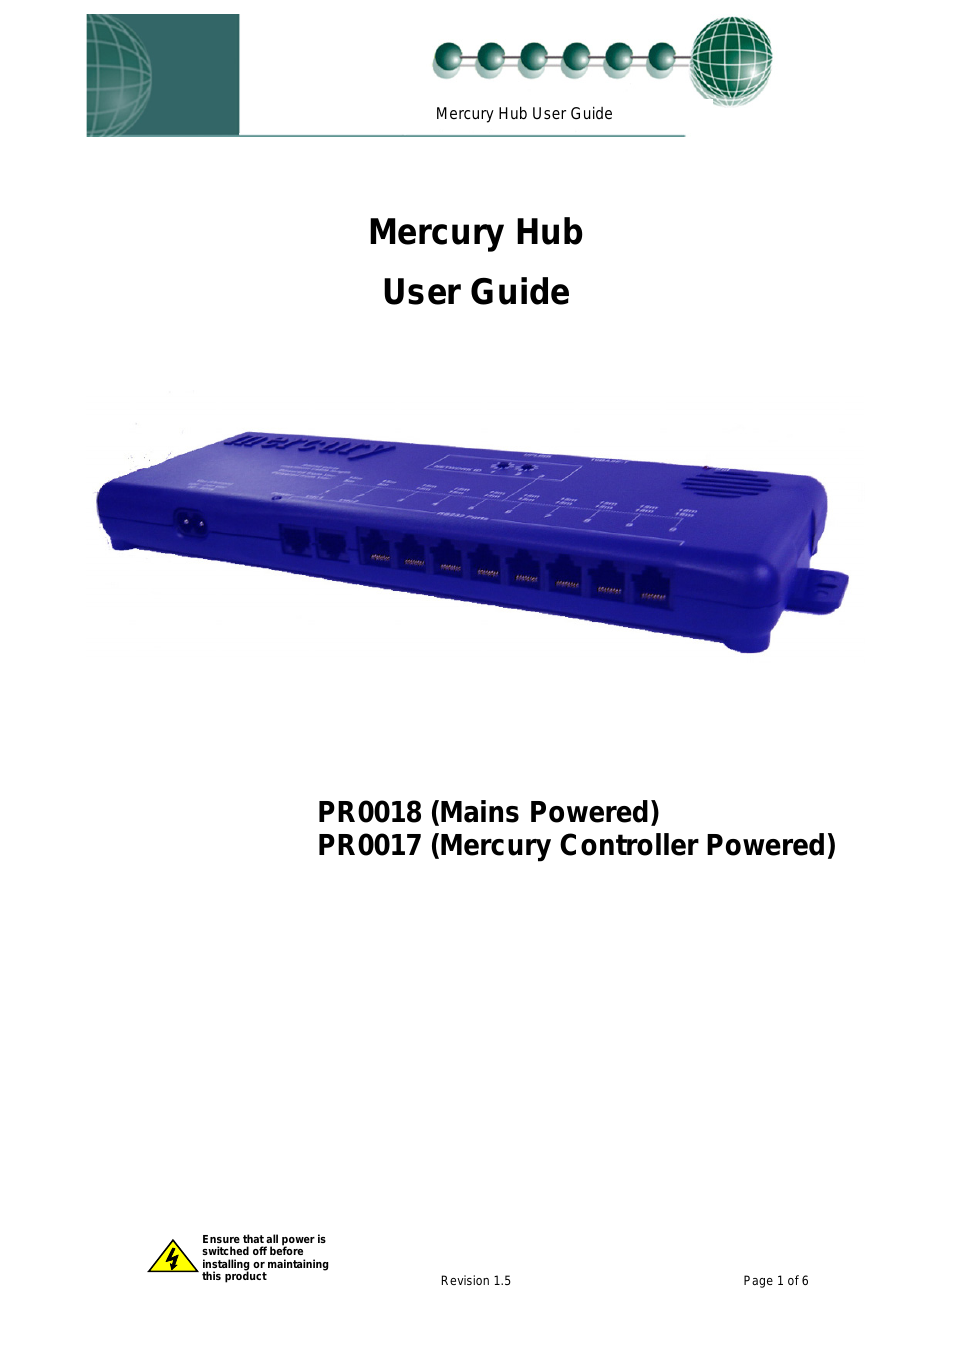 Mercury Hub PR0018